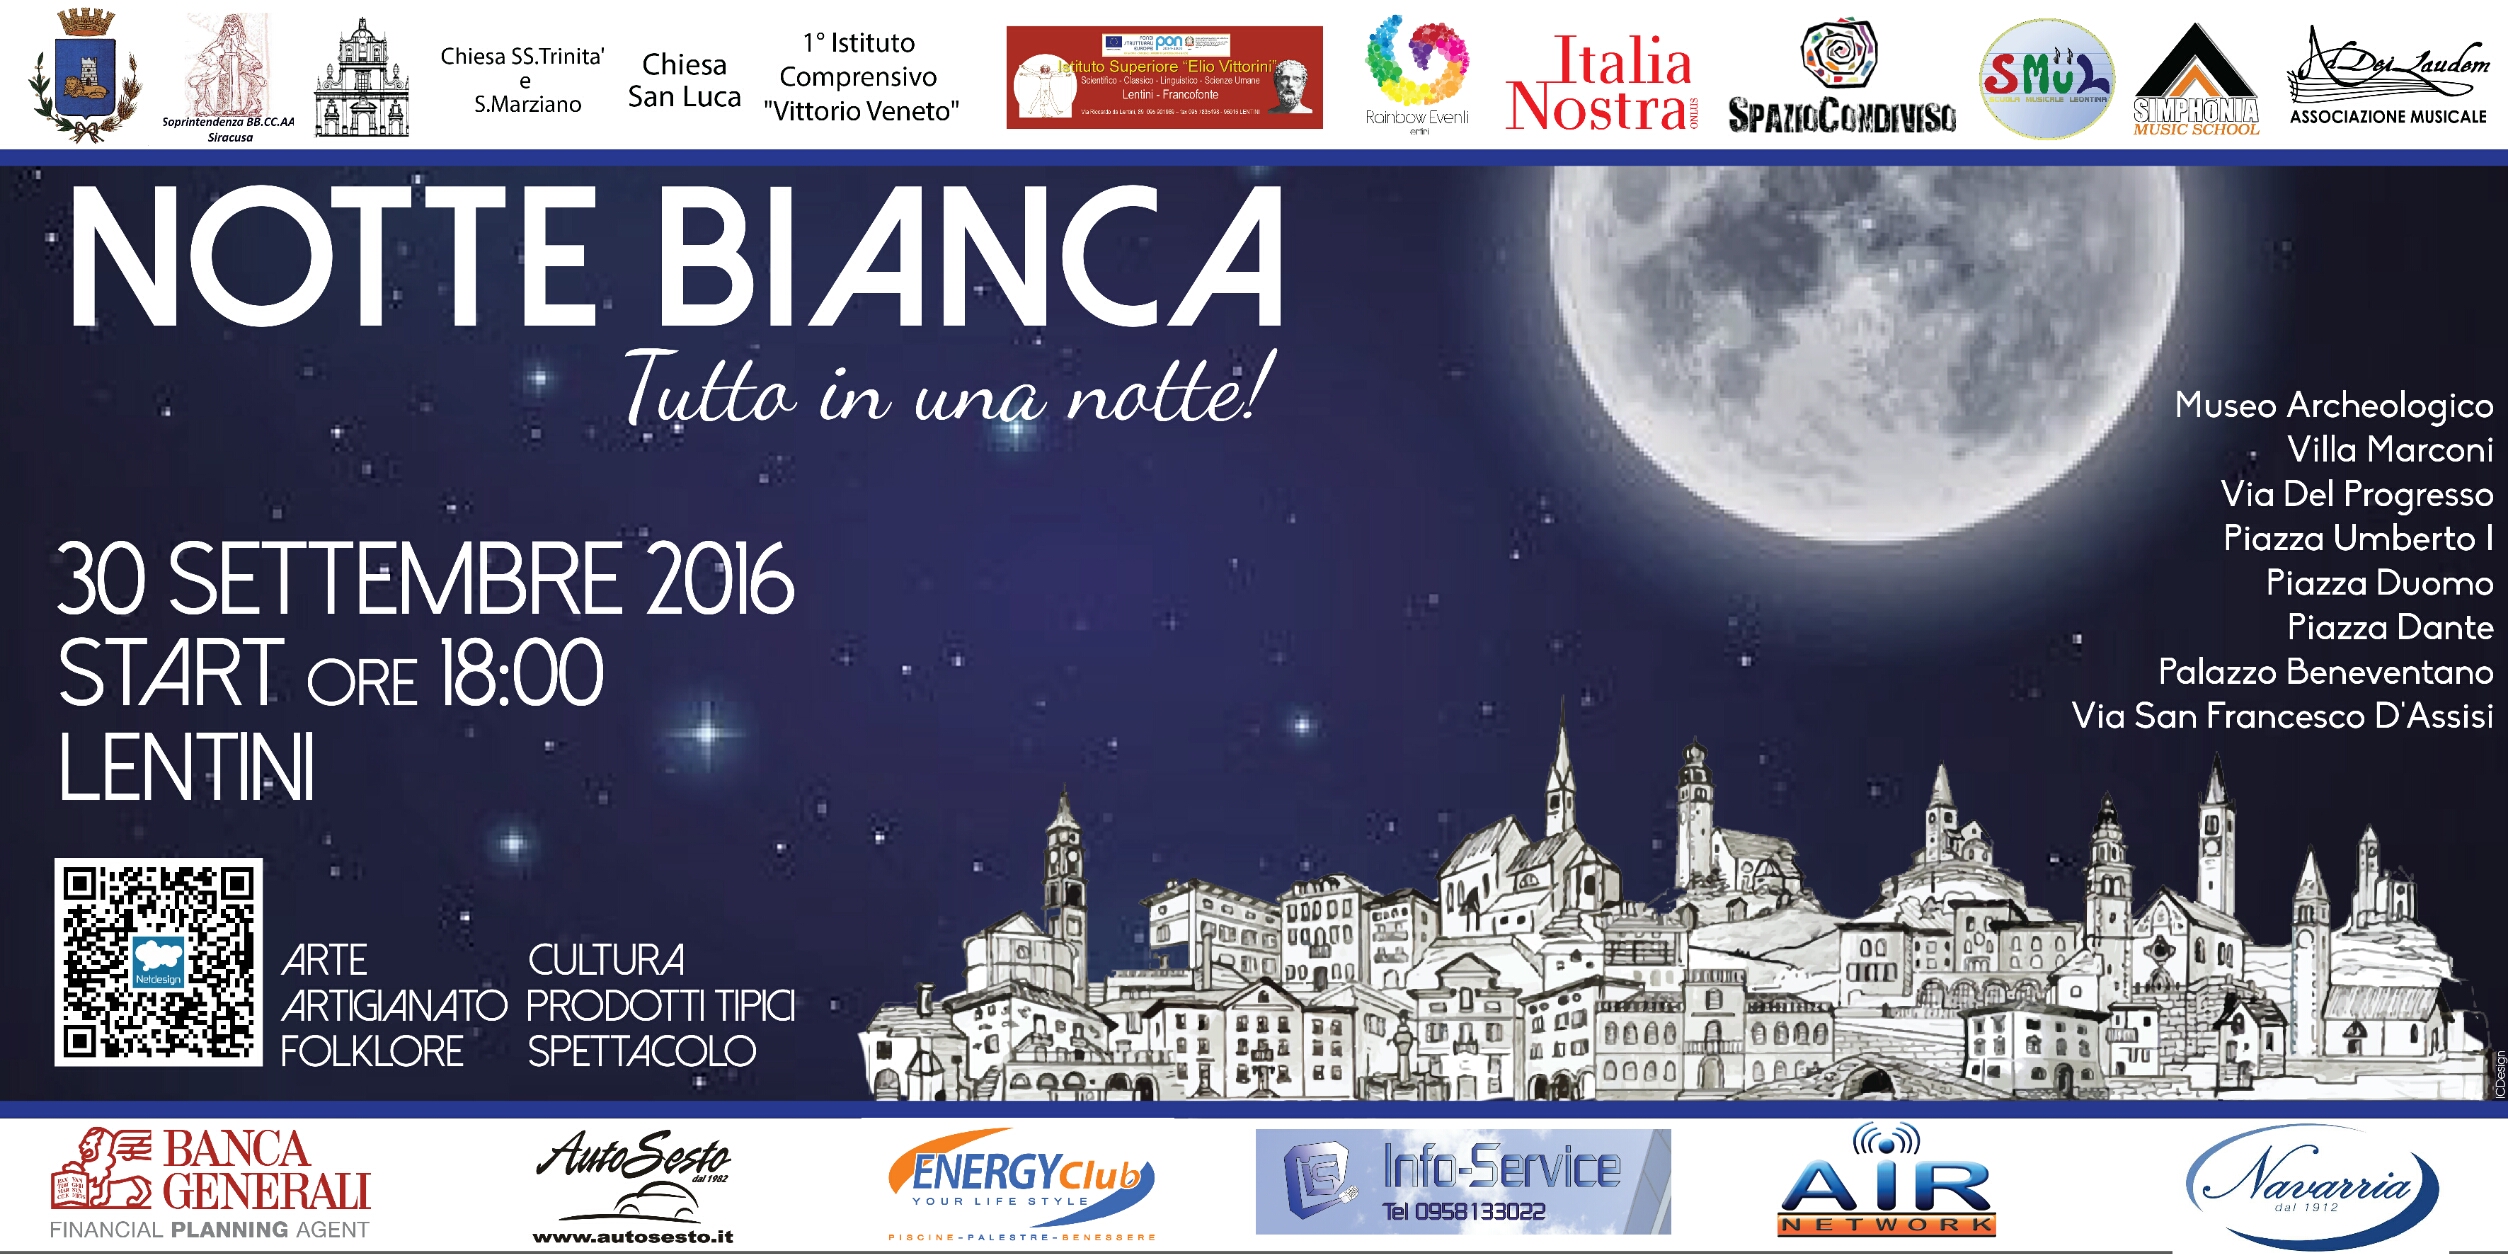 Notte Bianca - 30.09.2016